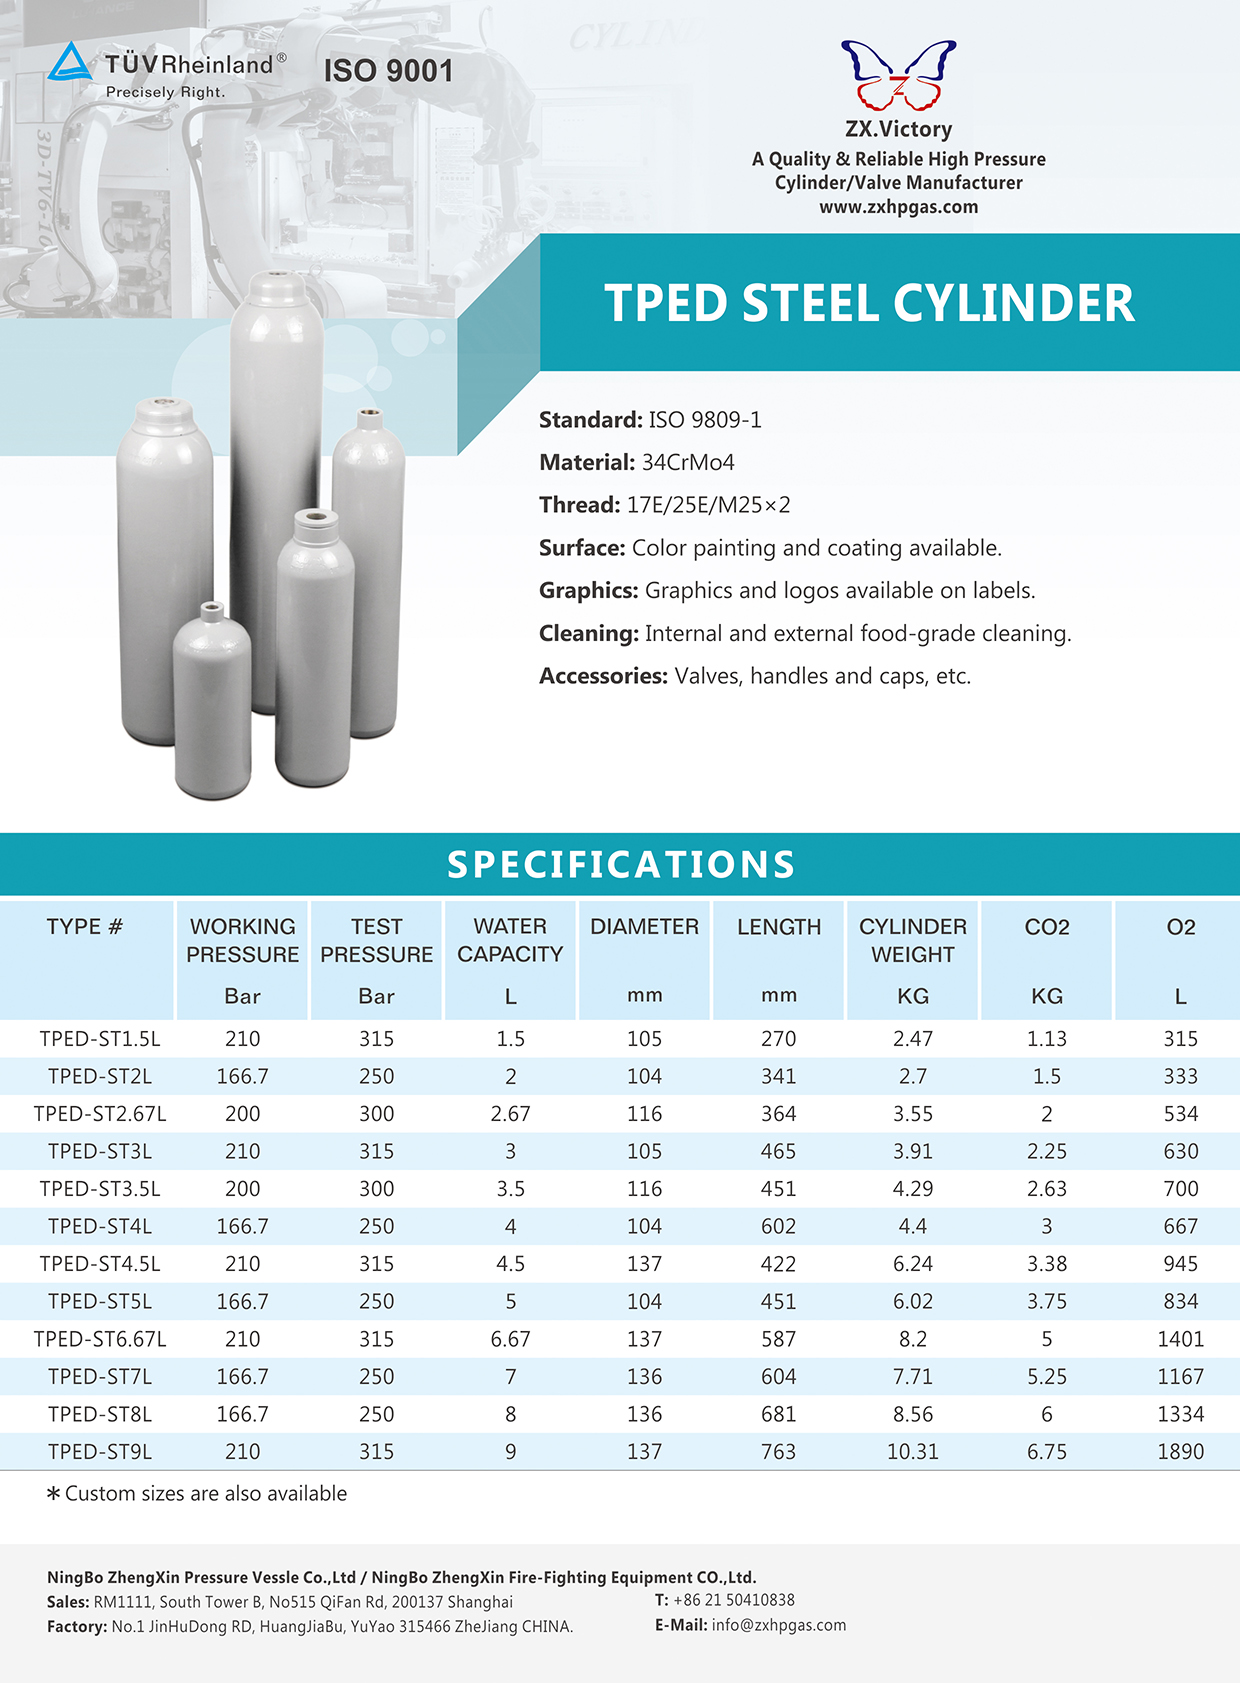 TPED Steel Cylinder